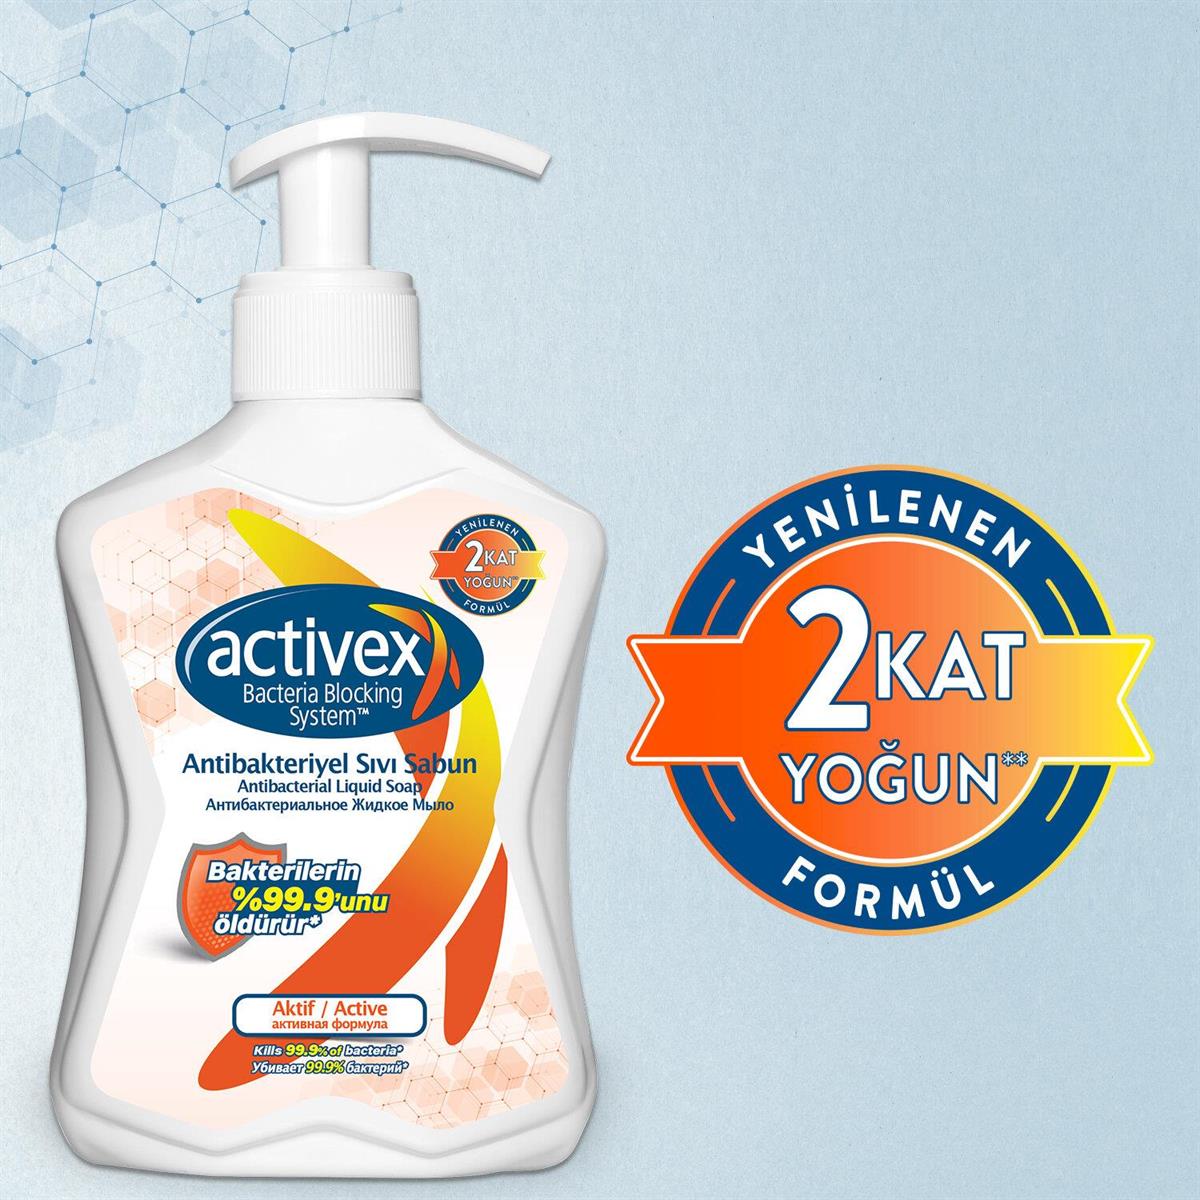 Activex Sıvı Sabun Aktif Antibakteriyel 300ml